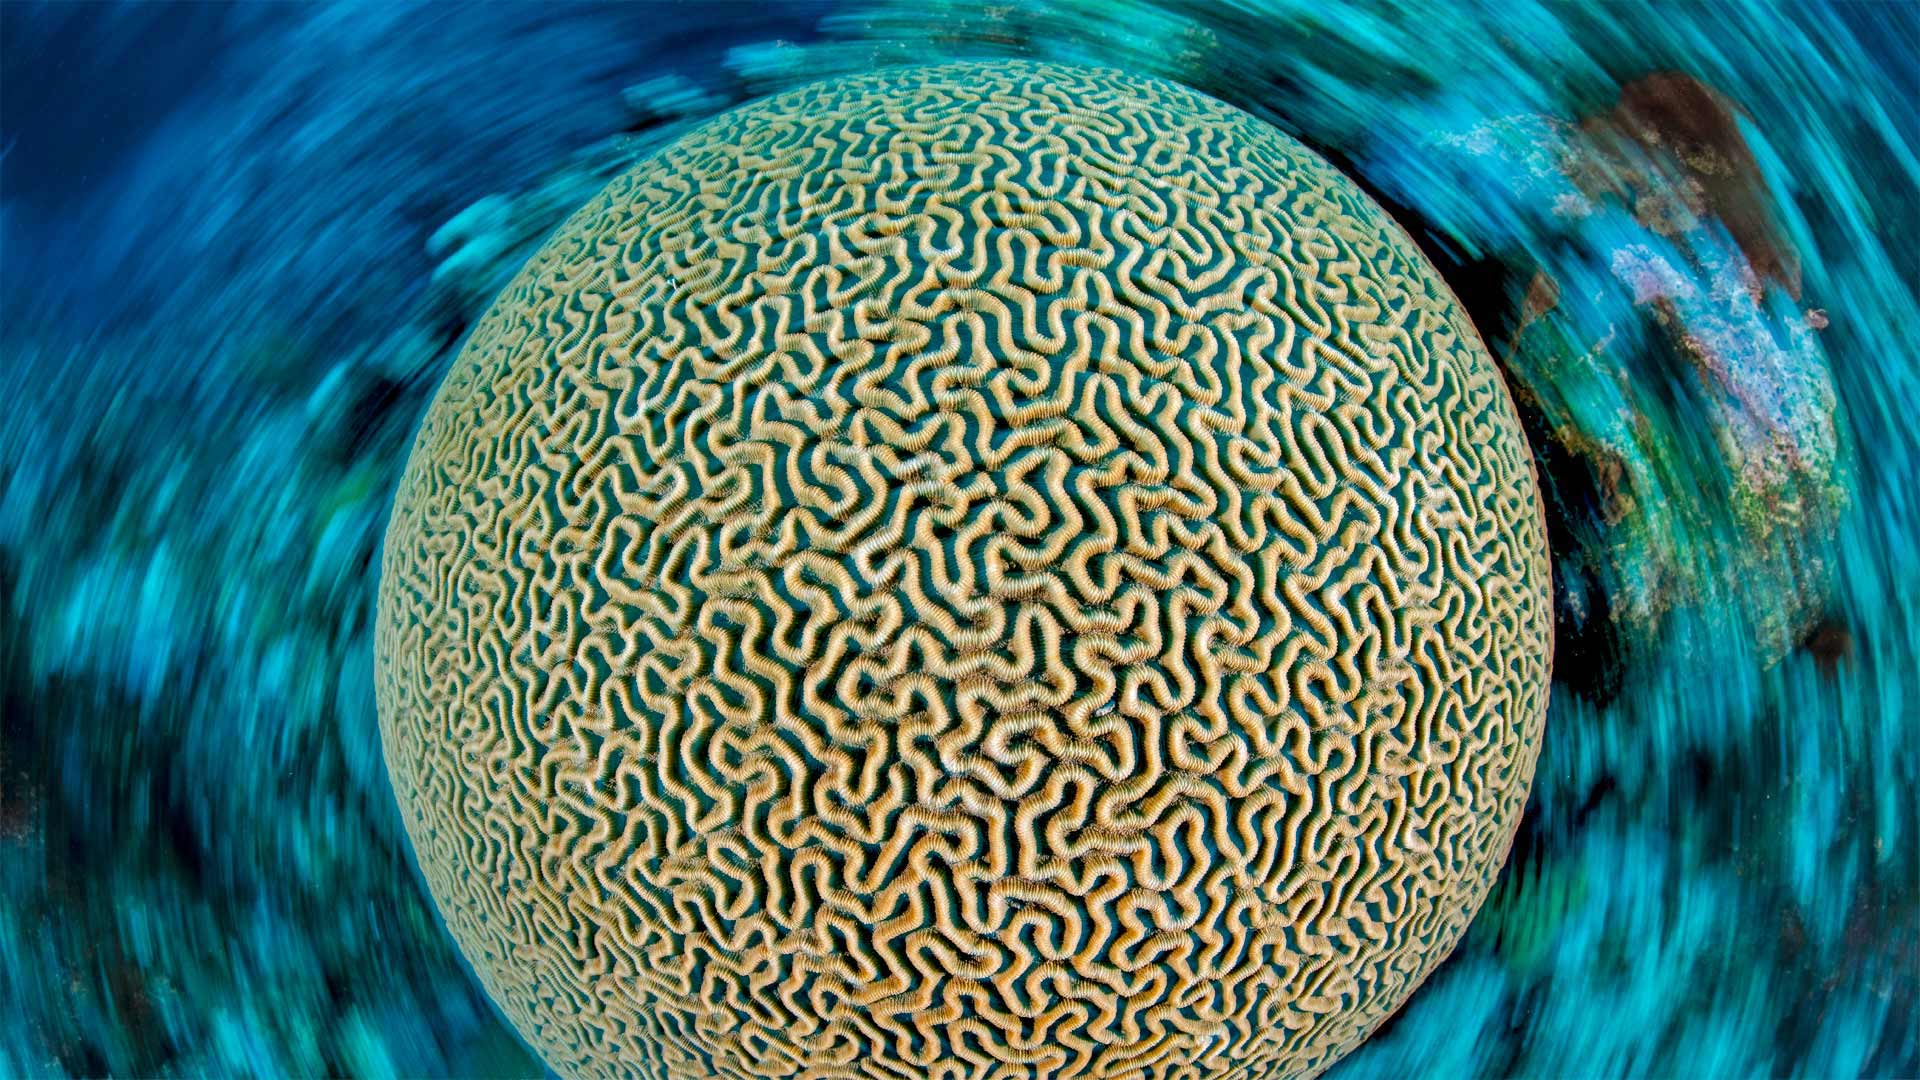 Symmetrical brain coral on a reef in the Caribbean Sea near Grand Cayman, Cayman Islands - Alex Mustard